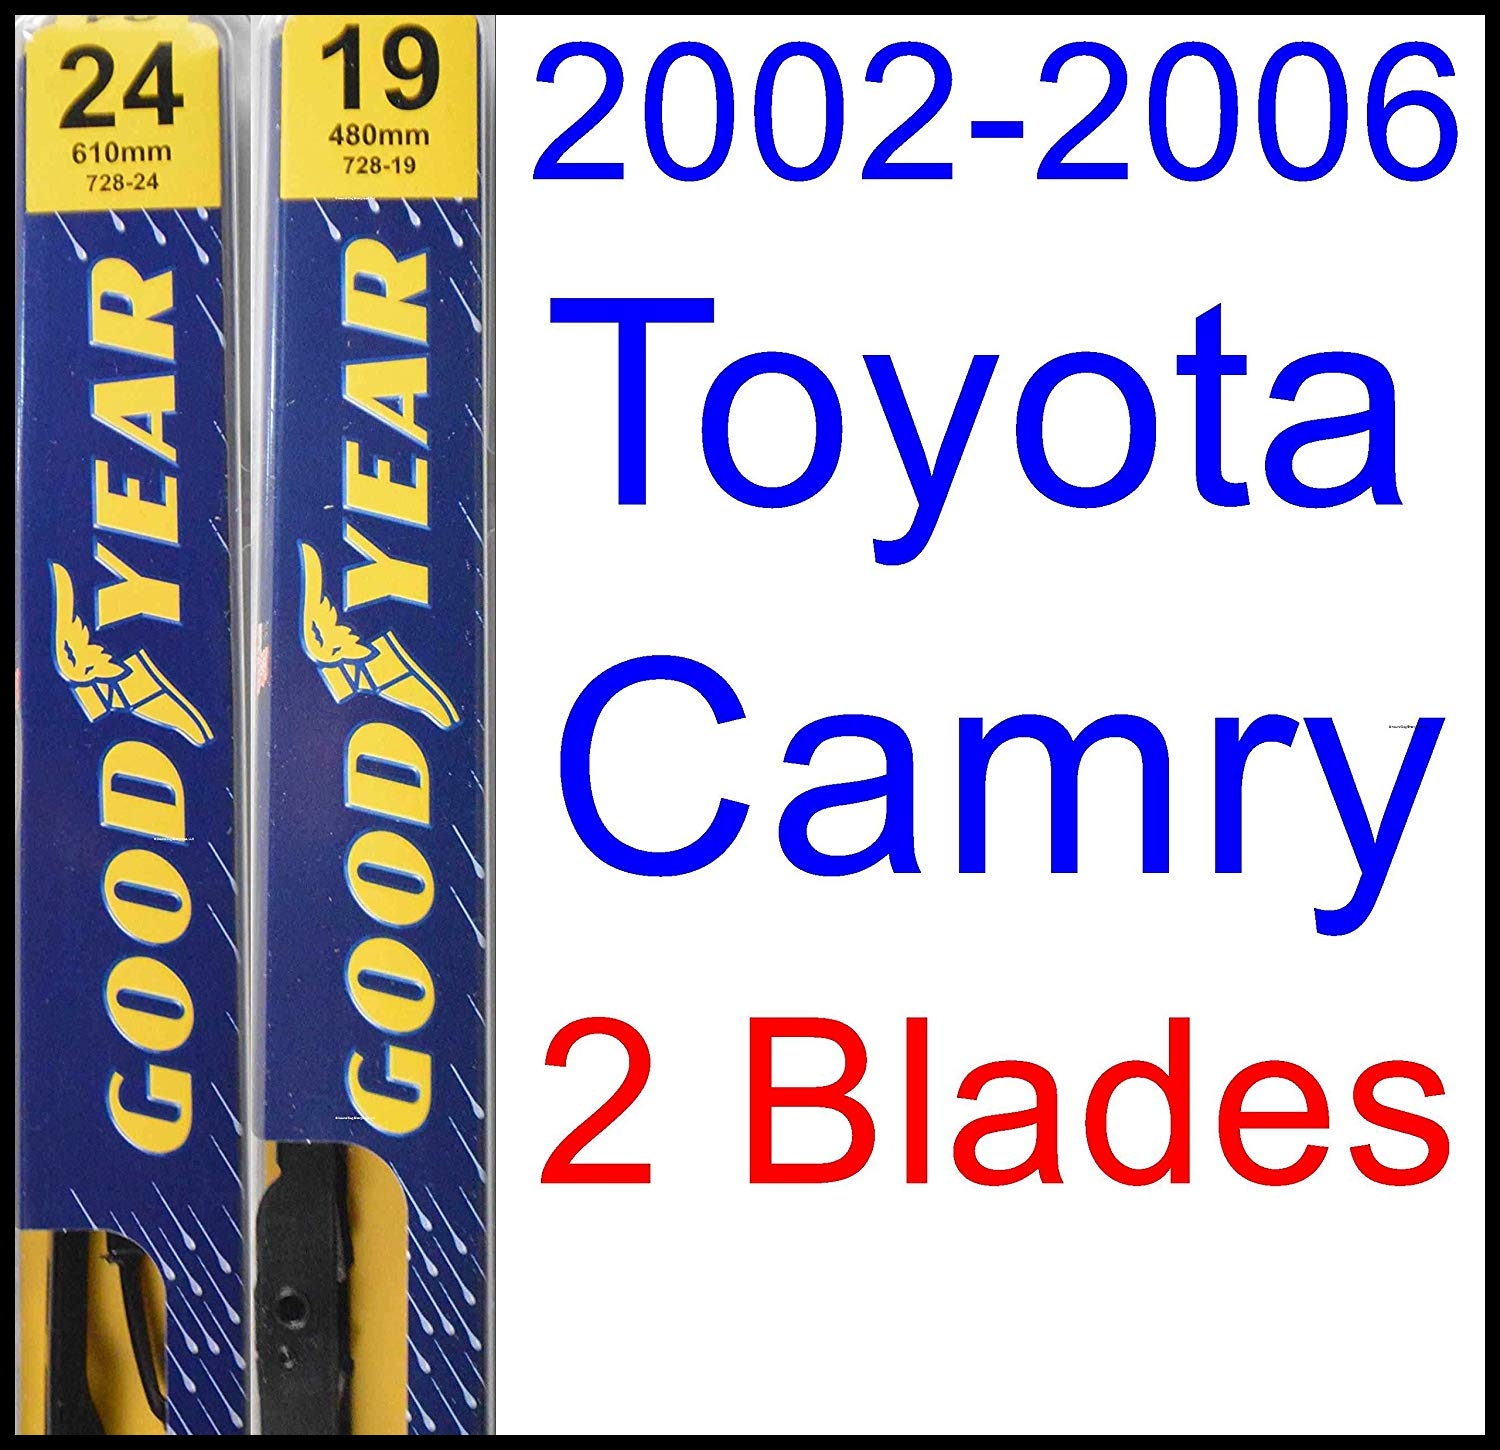 Amazon 2002 2006 Toyota Camry Replacement Wiper Blade Set Kit Set of 2 Blades Goodyear Wiper Blades Premium 2003 2004 2005 Automotive